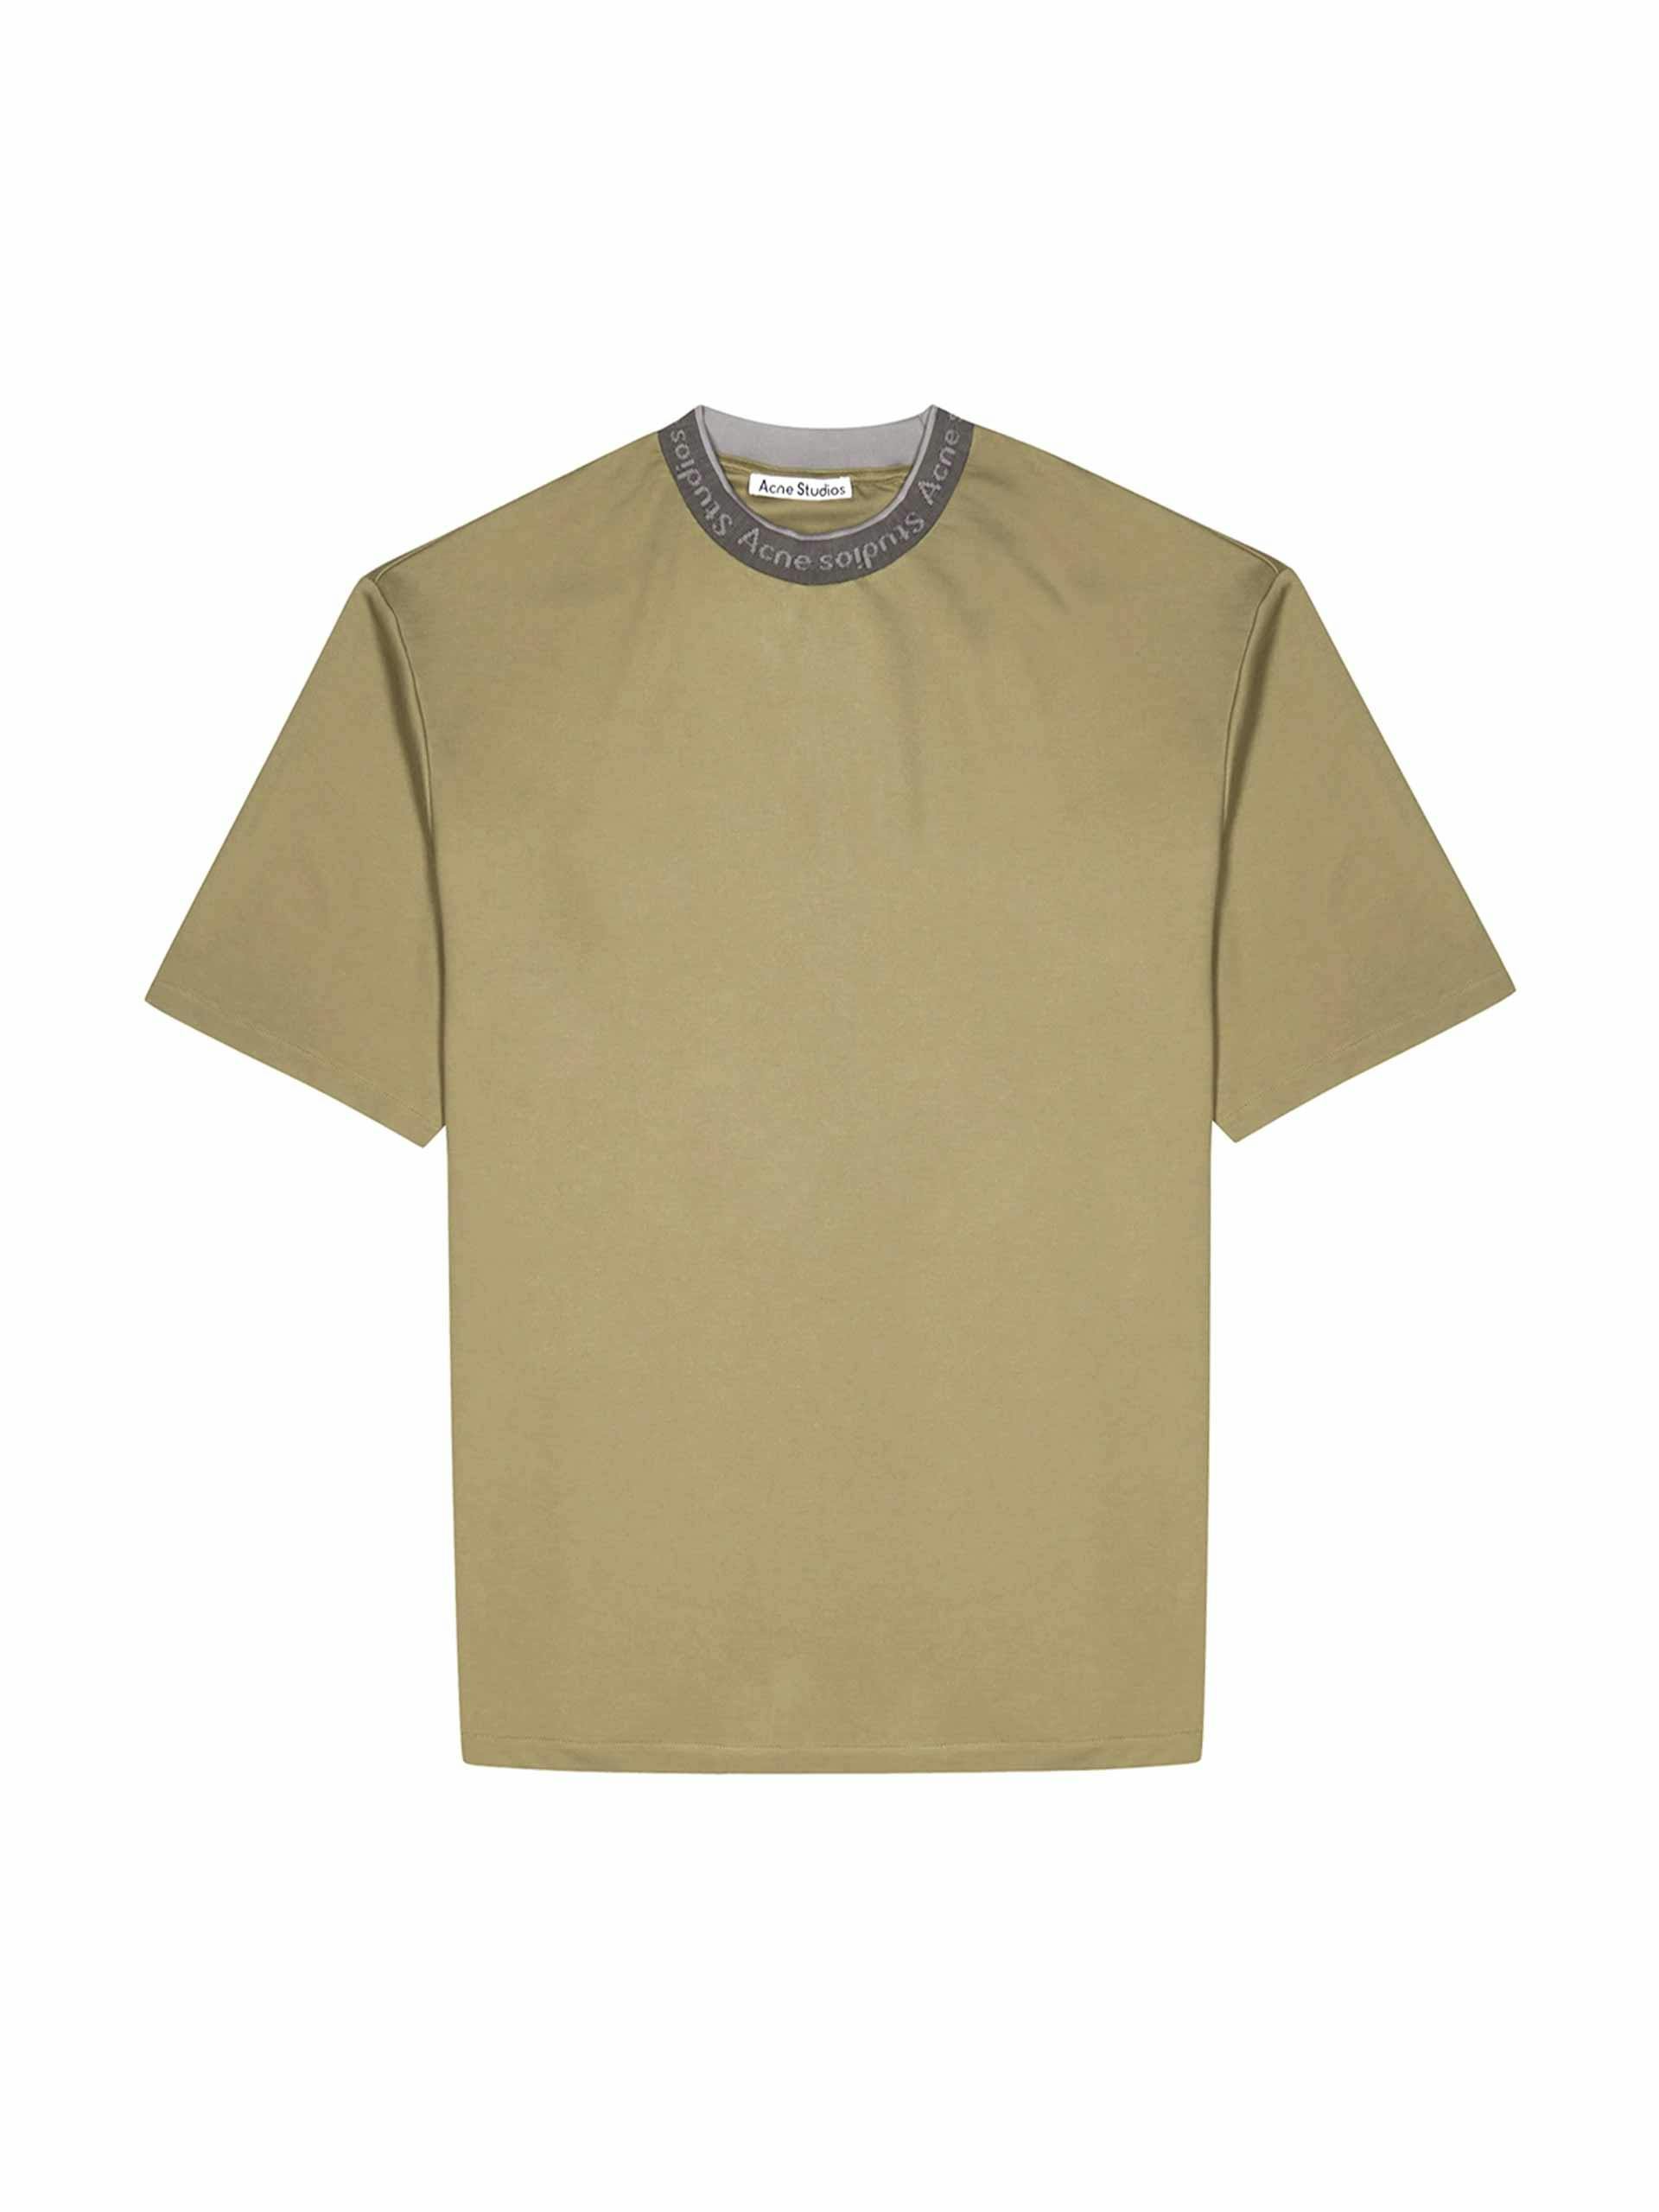 Extor olive stretch-jersey t-shirt